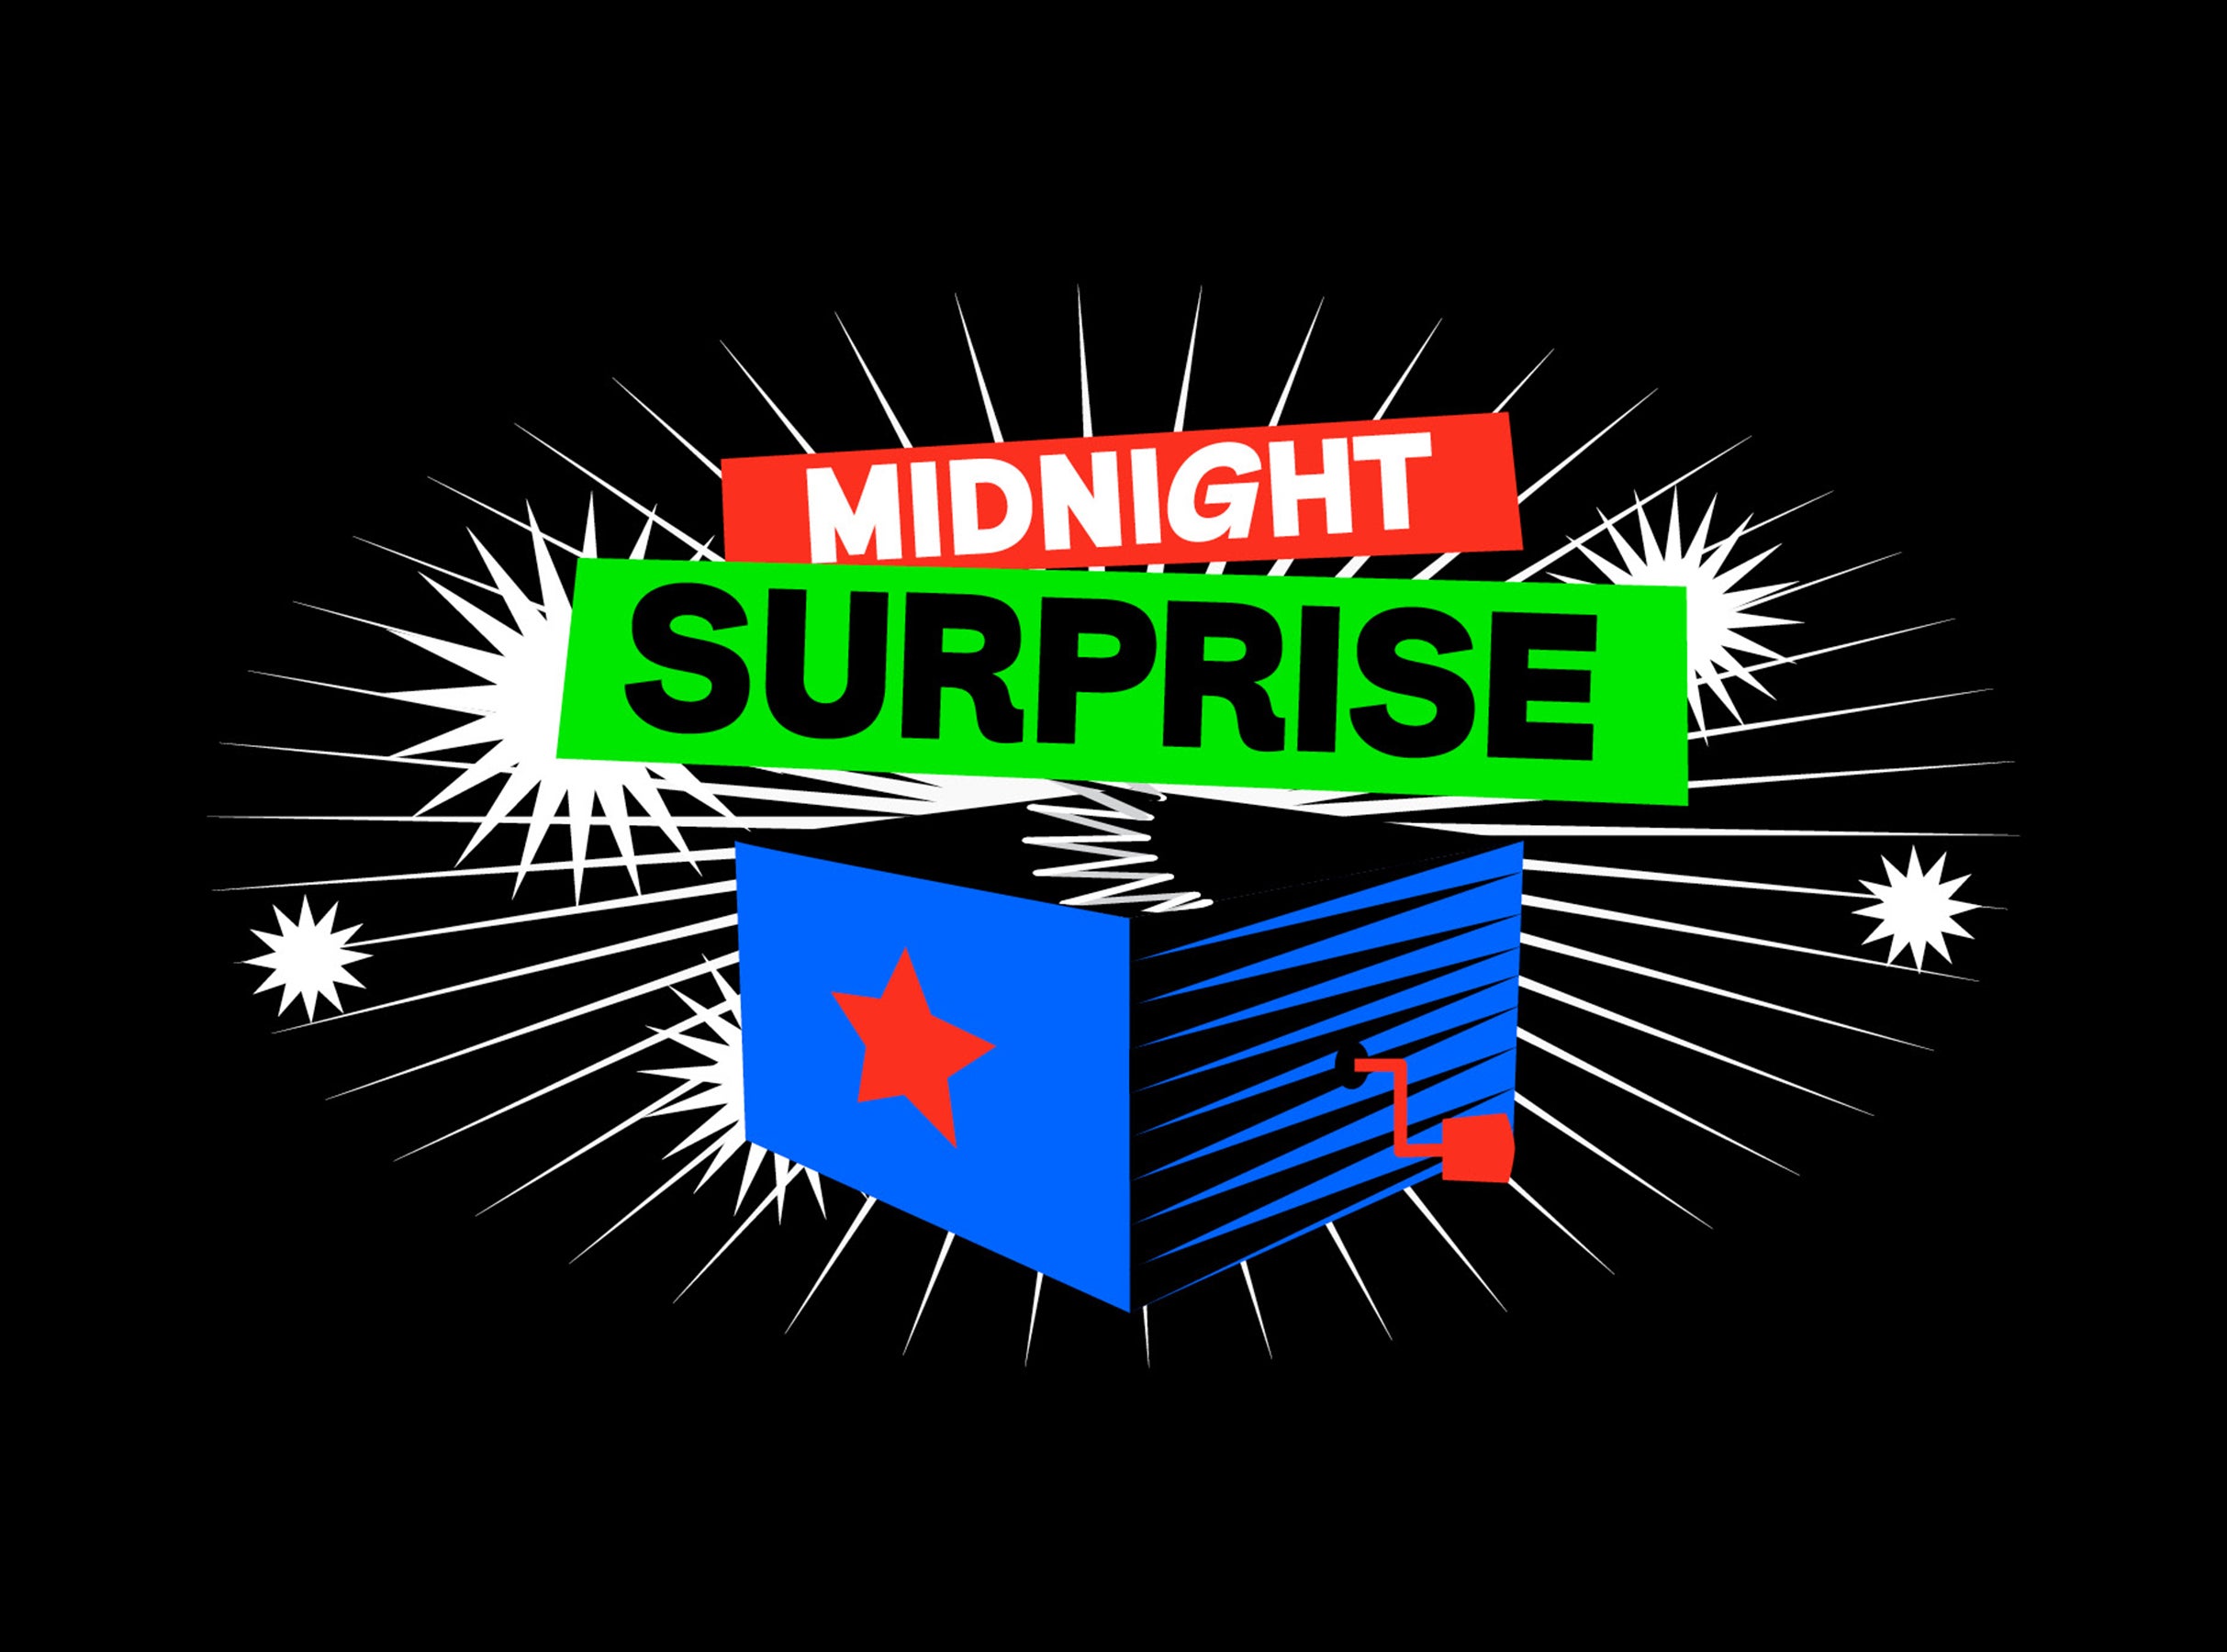 Midnight Surprise in Montréal promo photo for Prévente Just For Laughs presale offer code